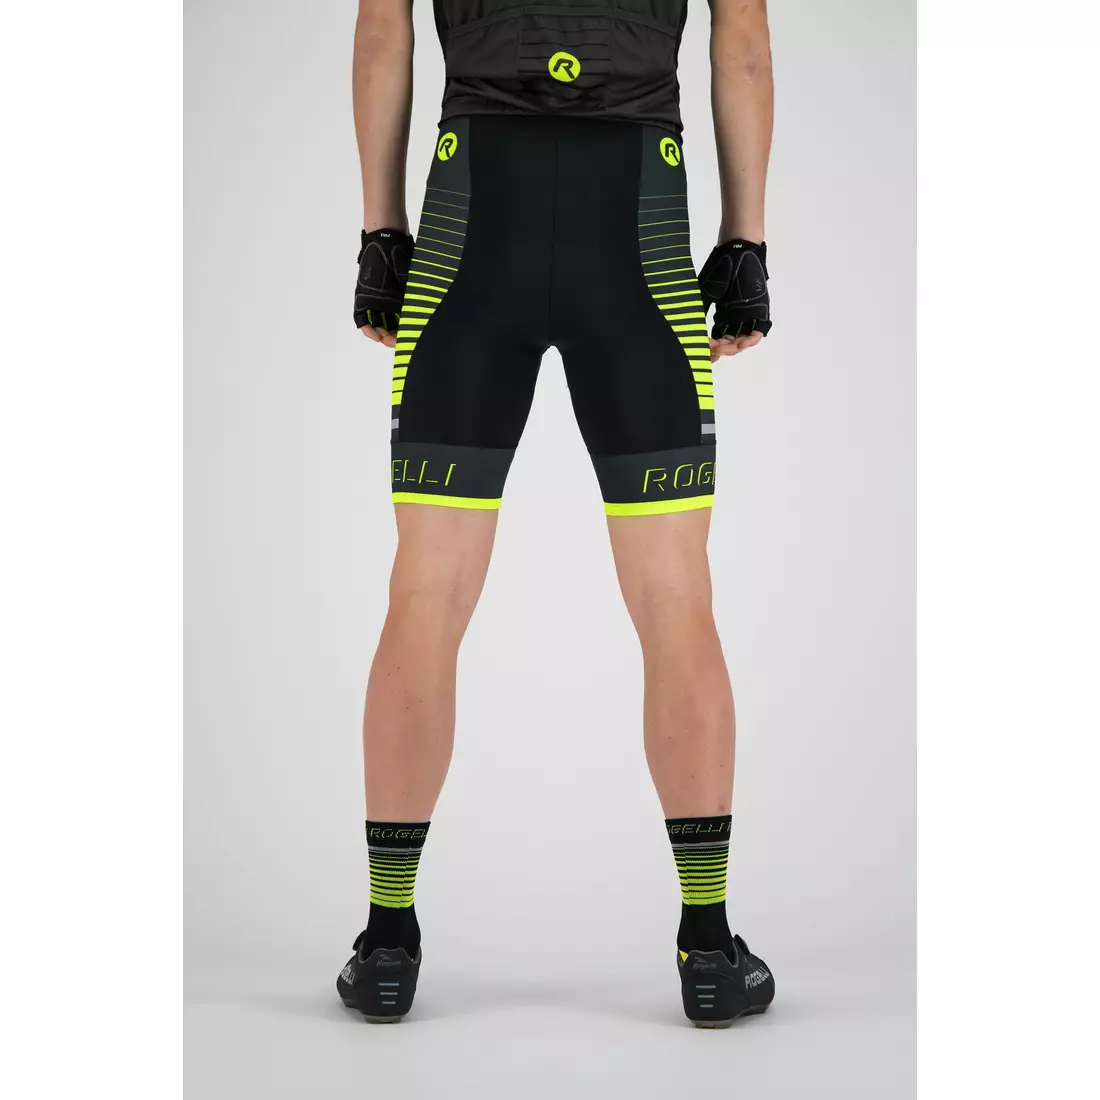 Rogelli HERO 002.236 Men Bike Bib shorts Black/Grey/Fluo